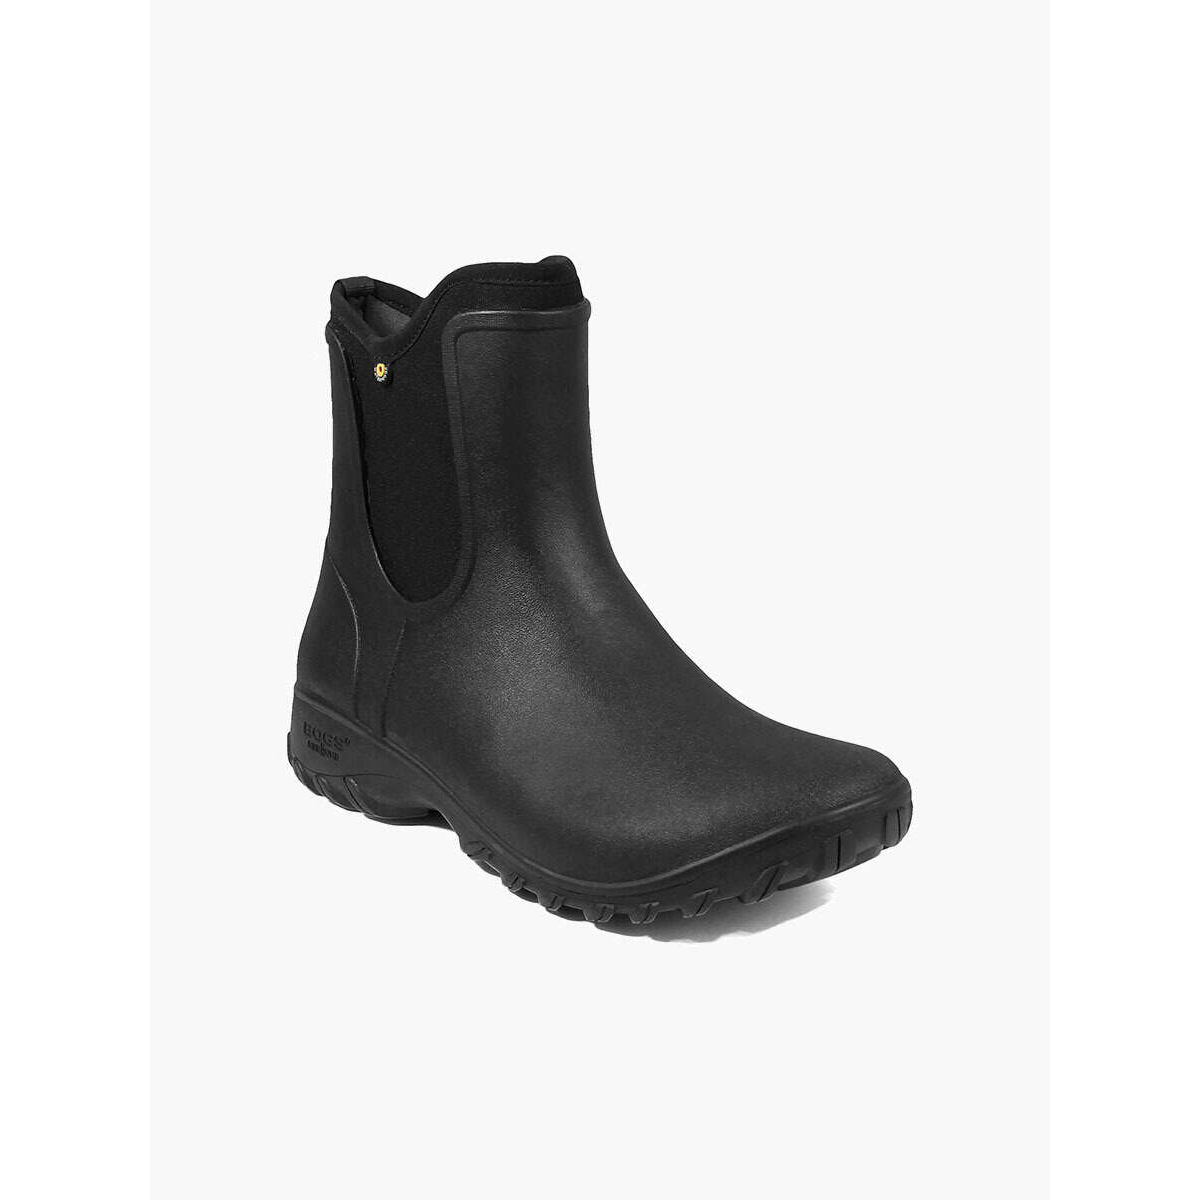 BOGS Women's Sauvie Slip On Waterproof Rain Boots Black - 72203-001 - BLACK, 10-M